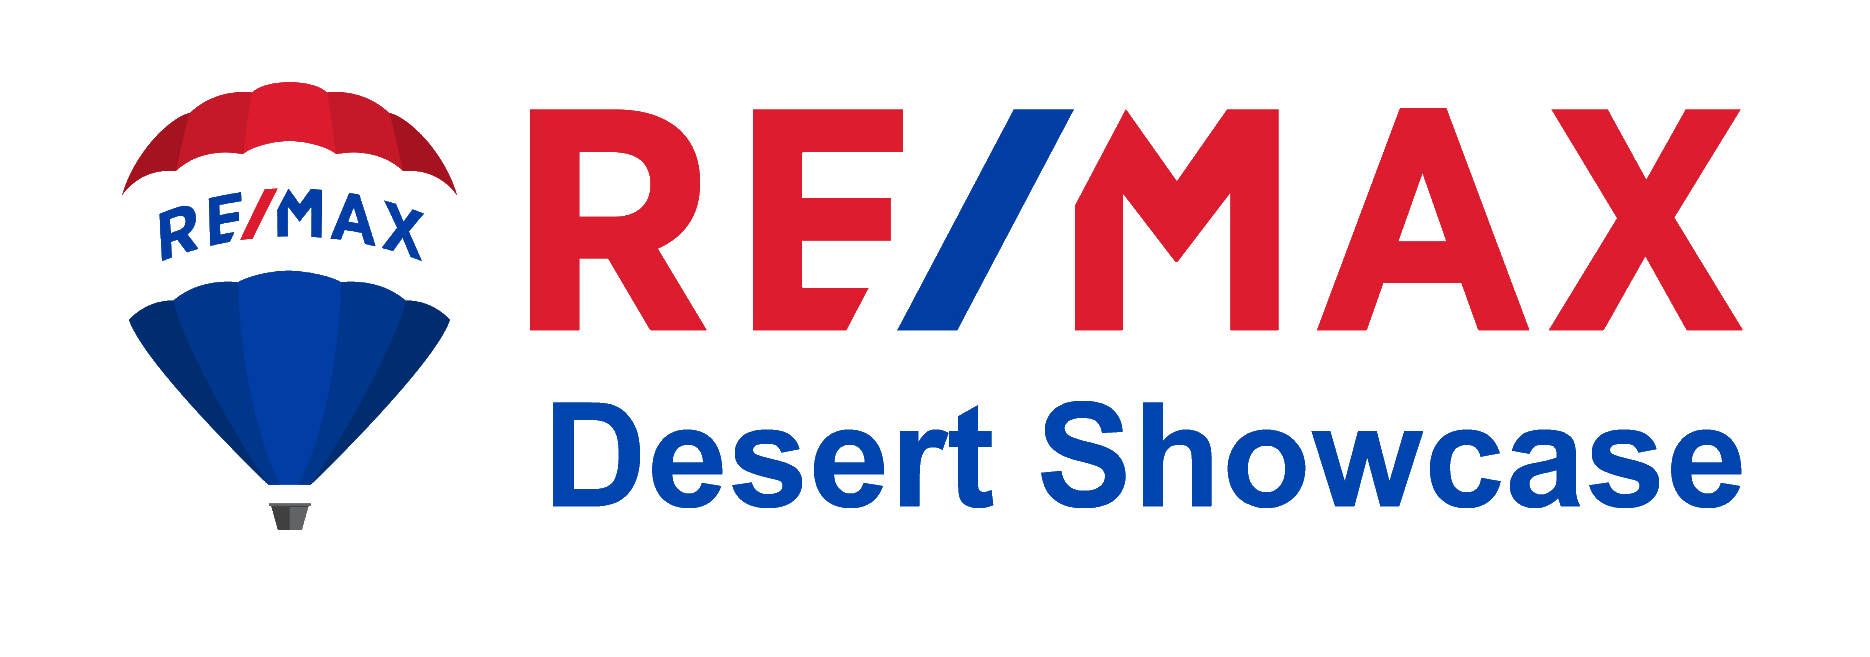 remax desert showcase logo